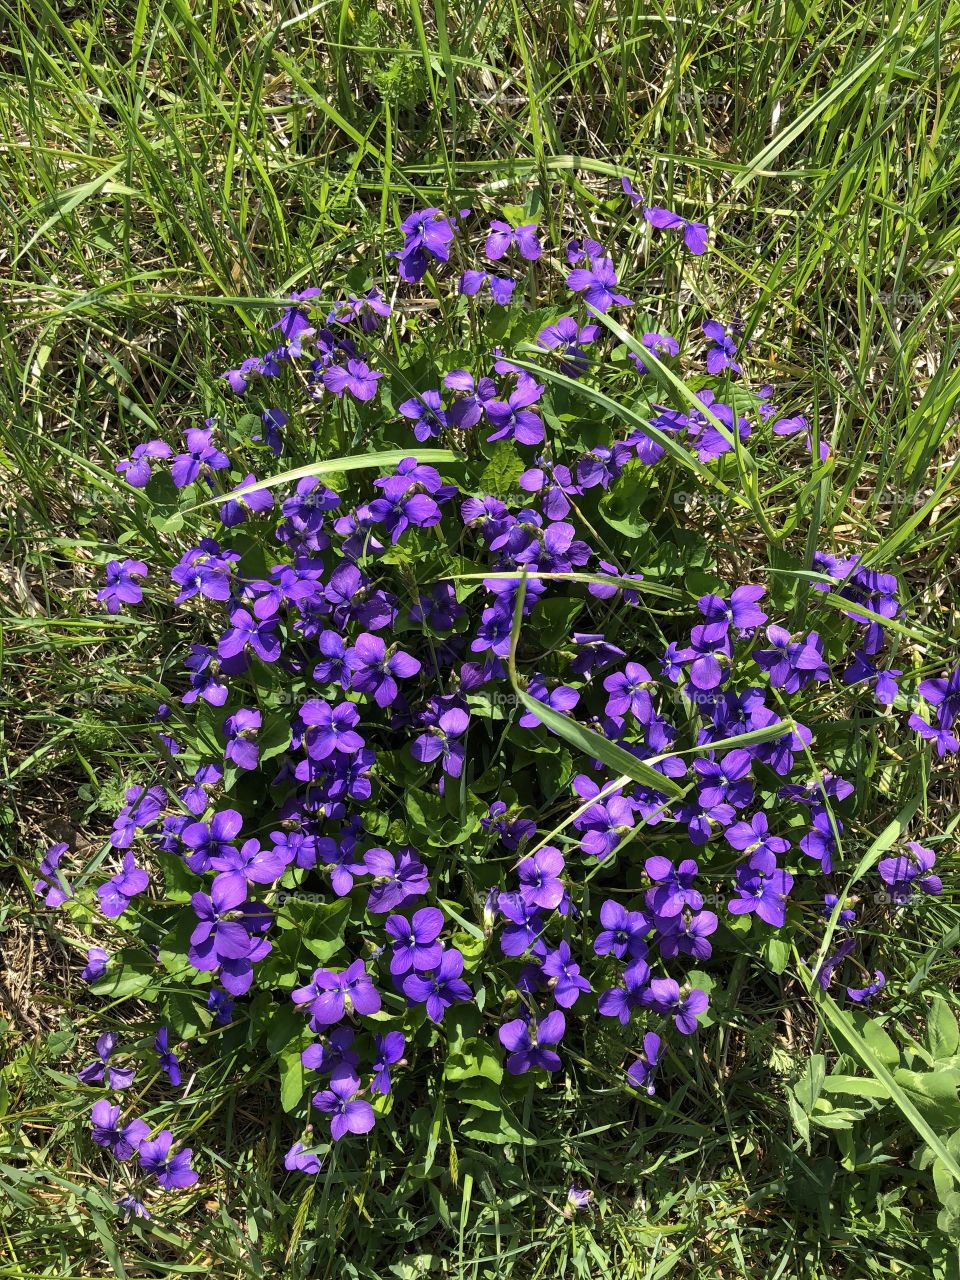 A beautiful purple spring flower!